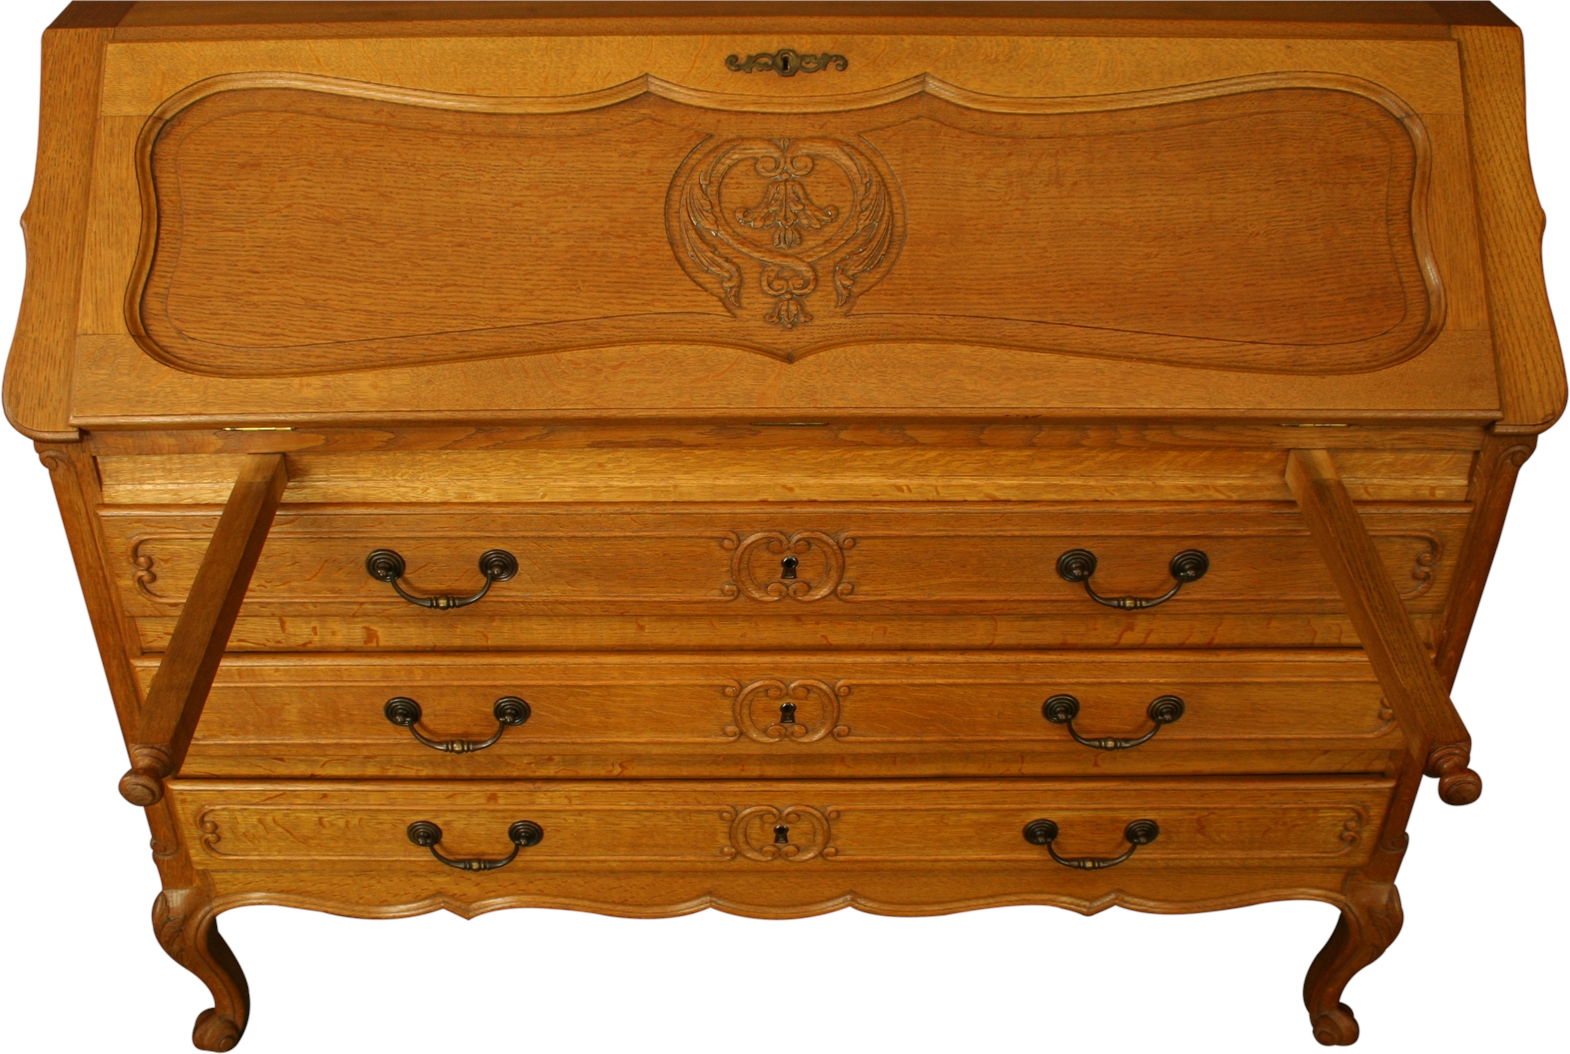 Vintage French Secretary Desk, Quartersawn Golden Oak, Carved, Louis XV Style-Image 7